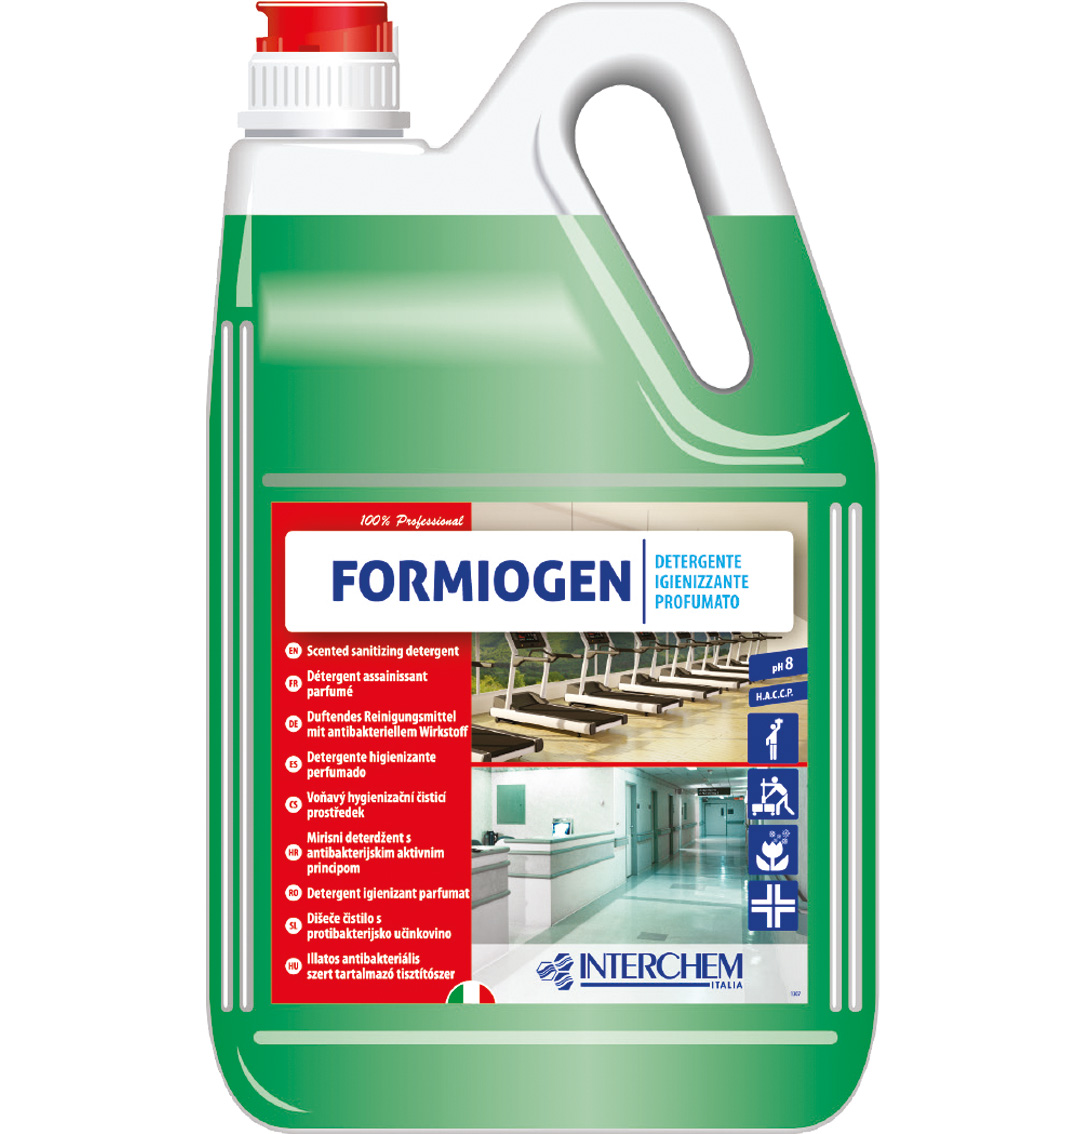 FORMIOGEN Detergente igienizzante profumato lt 5